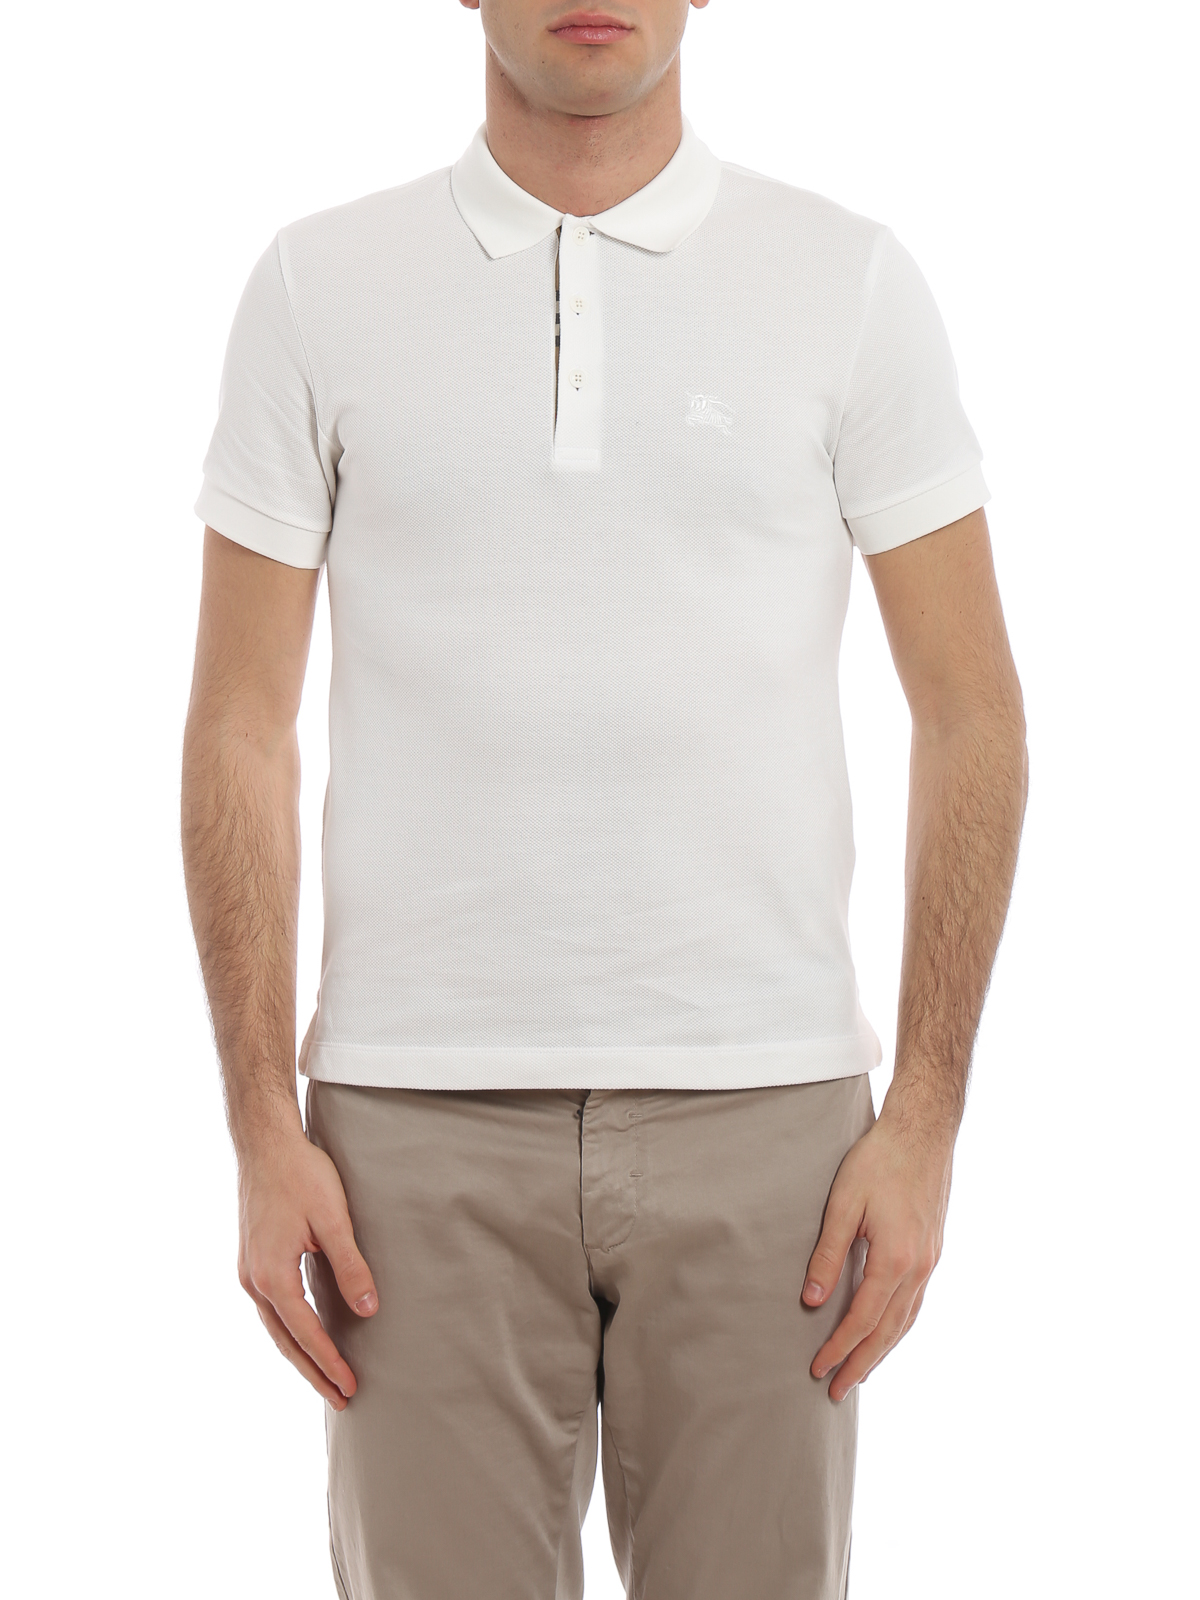 Polo shirts Burberry - Hartford classic white cotton polo - 8000919